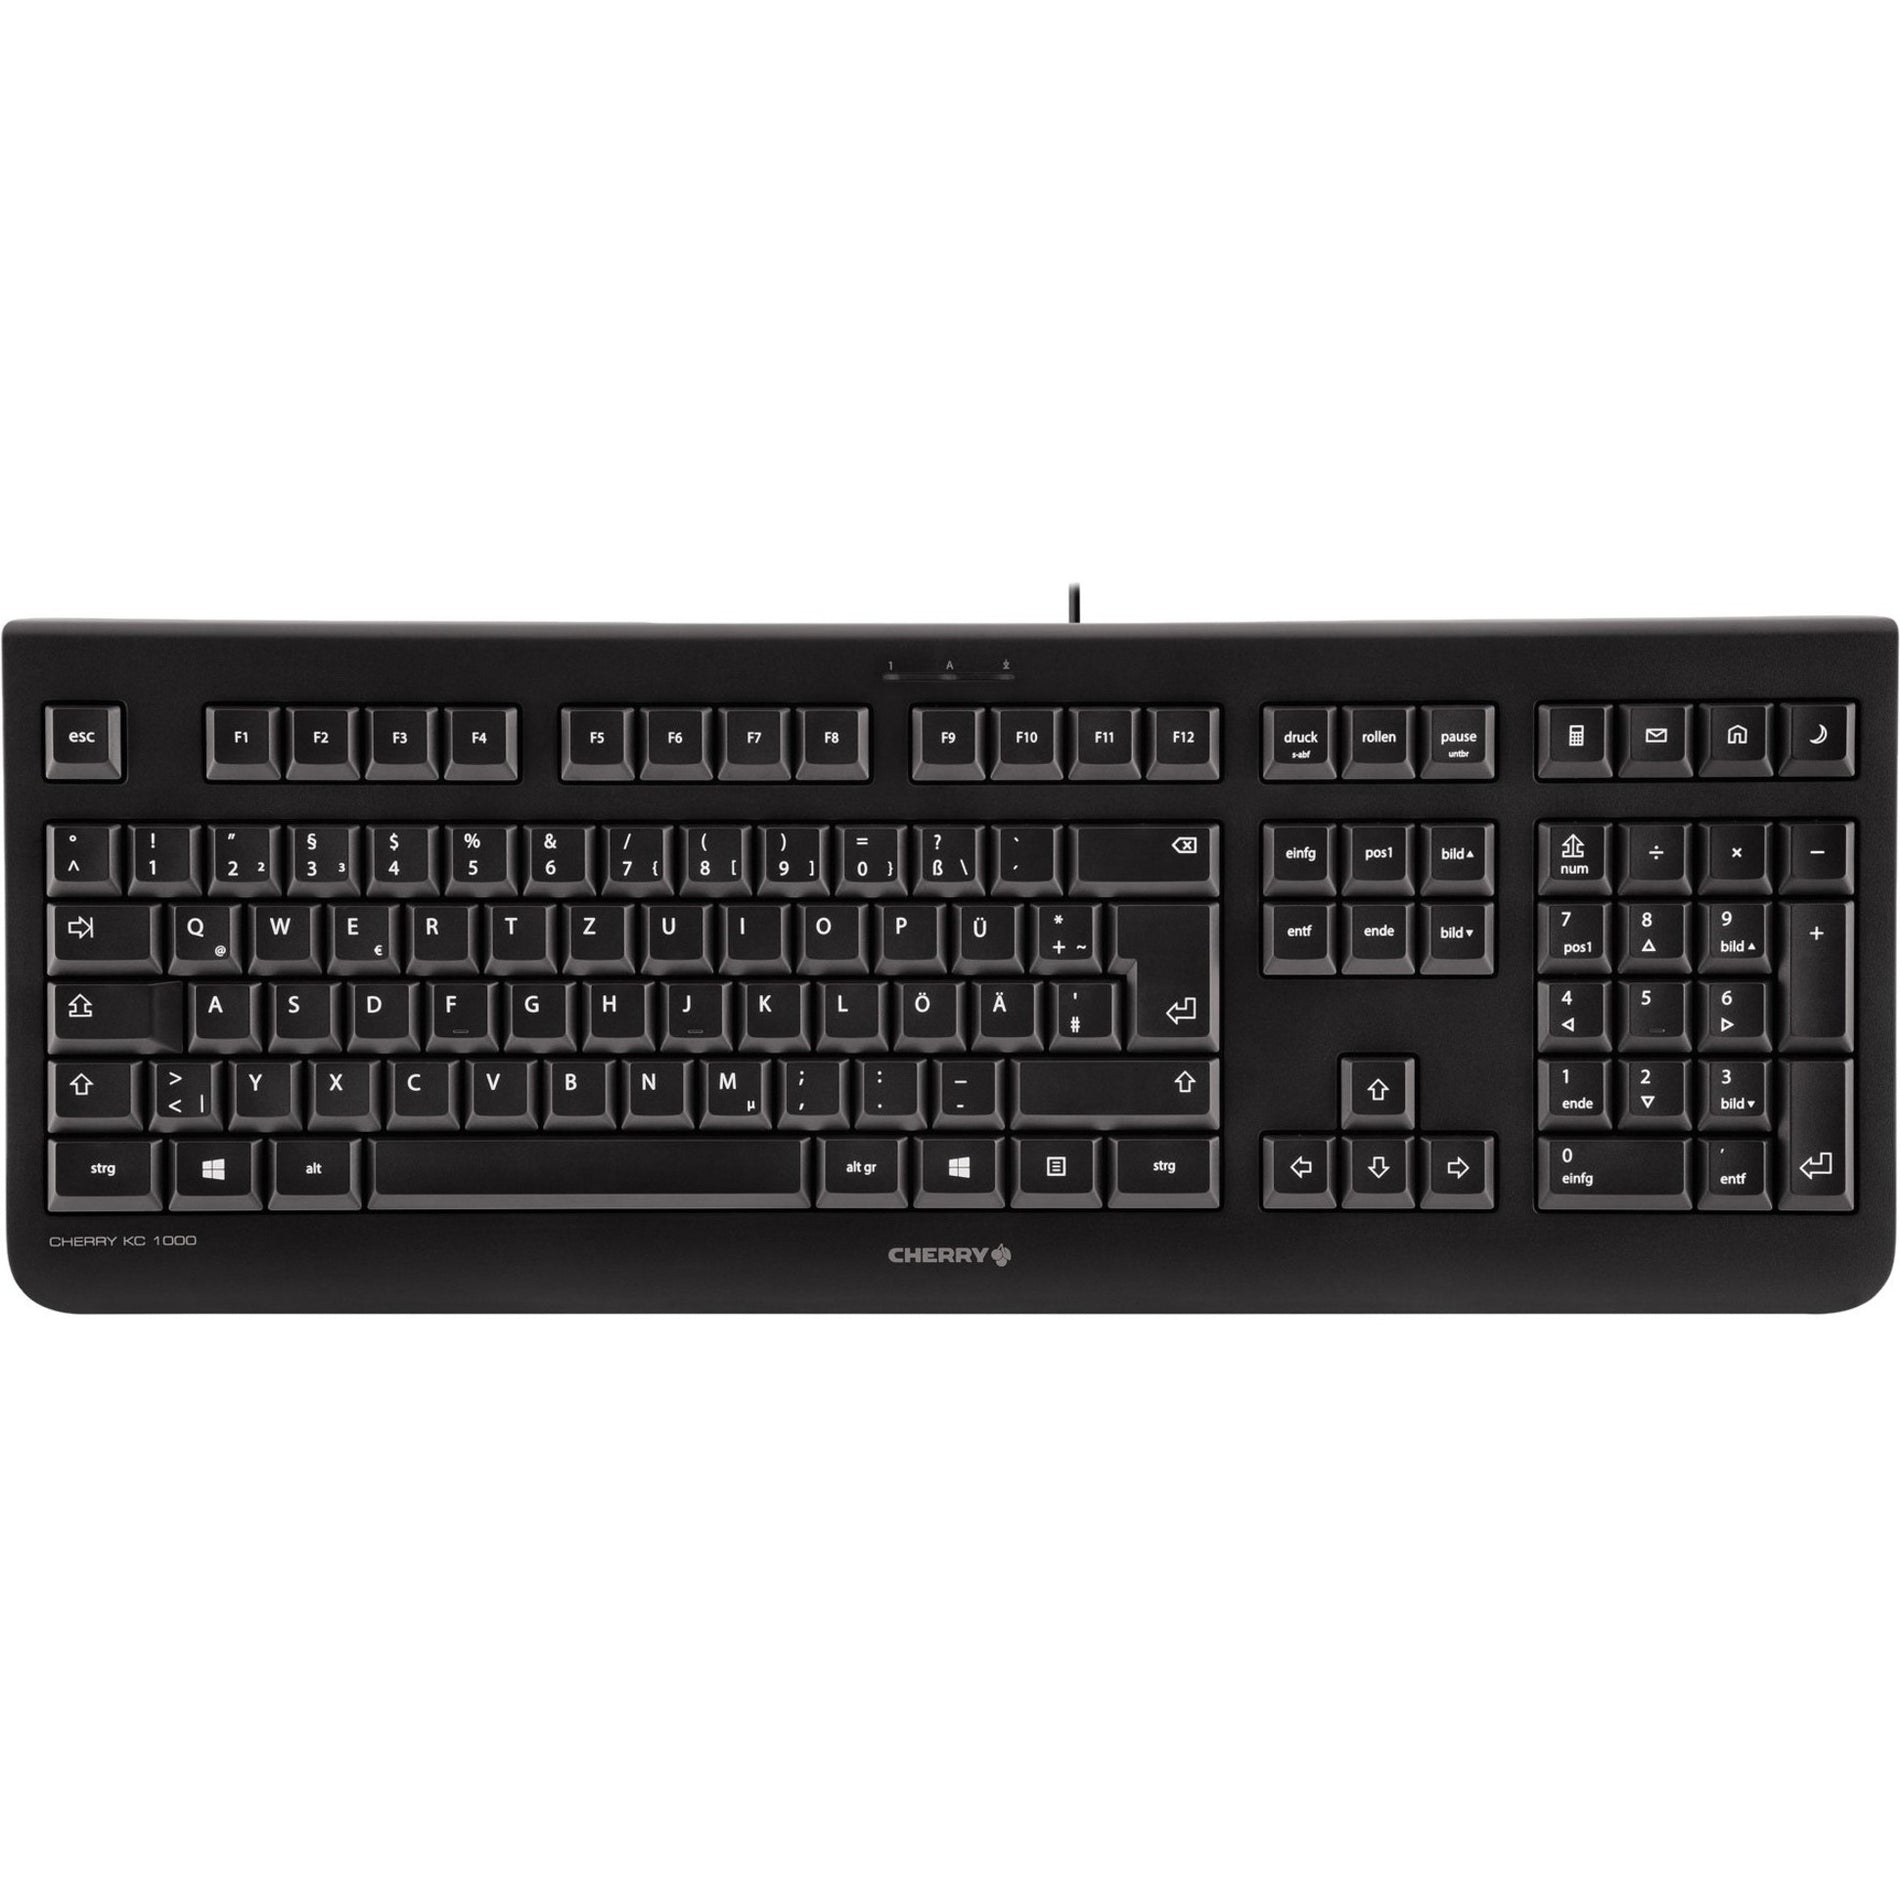 CHERRY JK-0800ES-2 KC 1000 Keyboard, Spanish Layout, LED Indicator, Quiet Keys